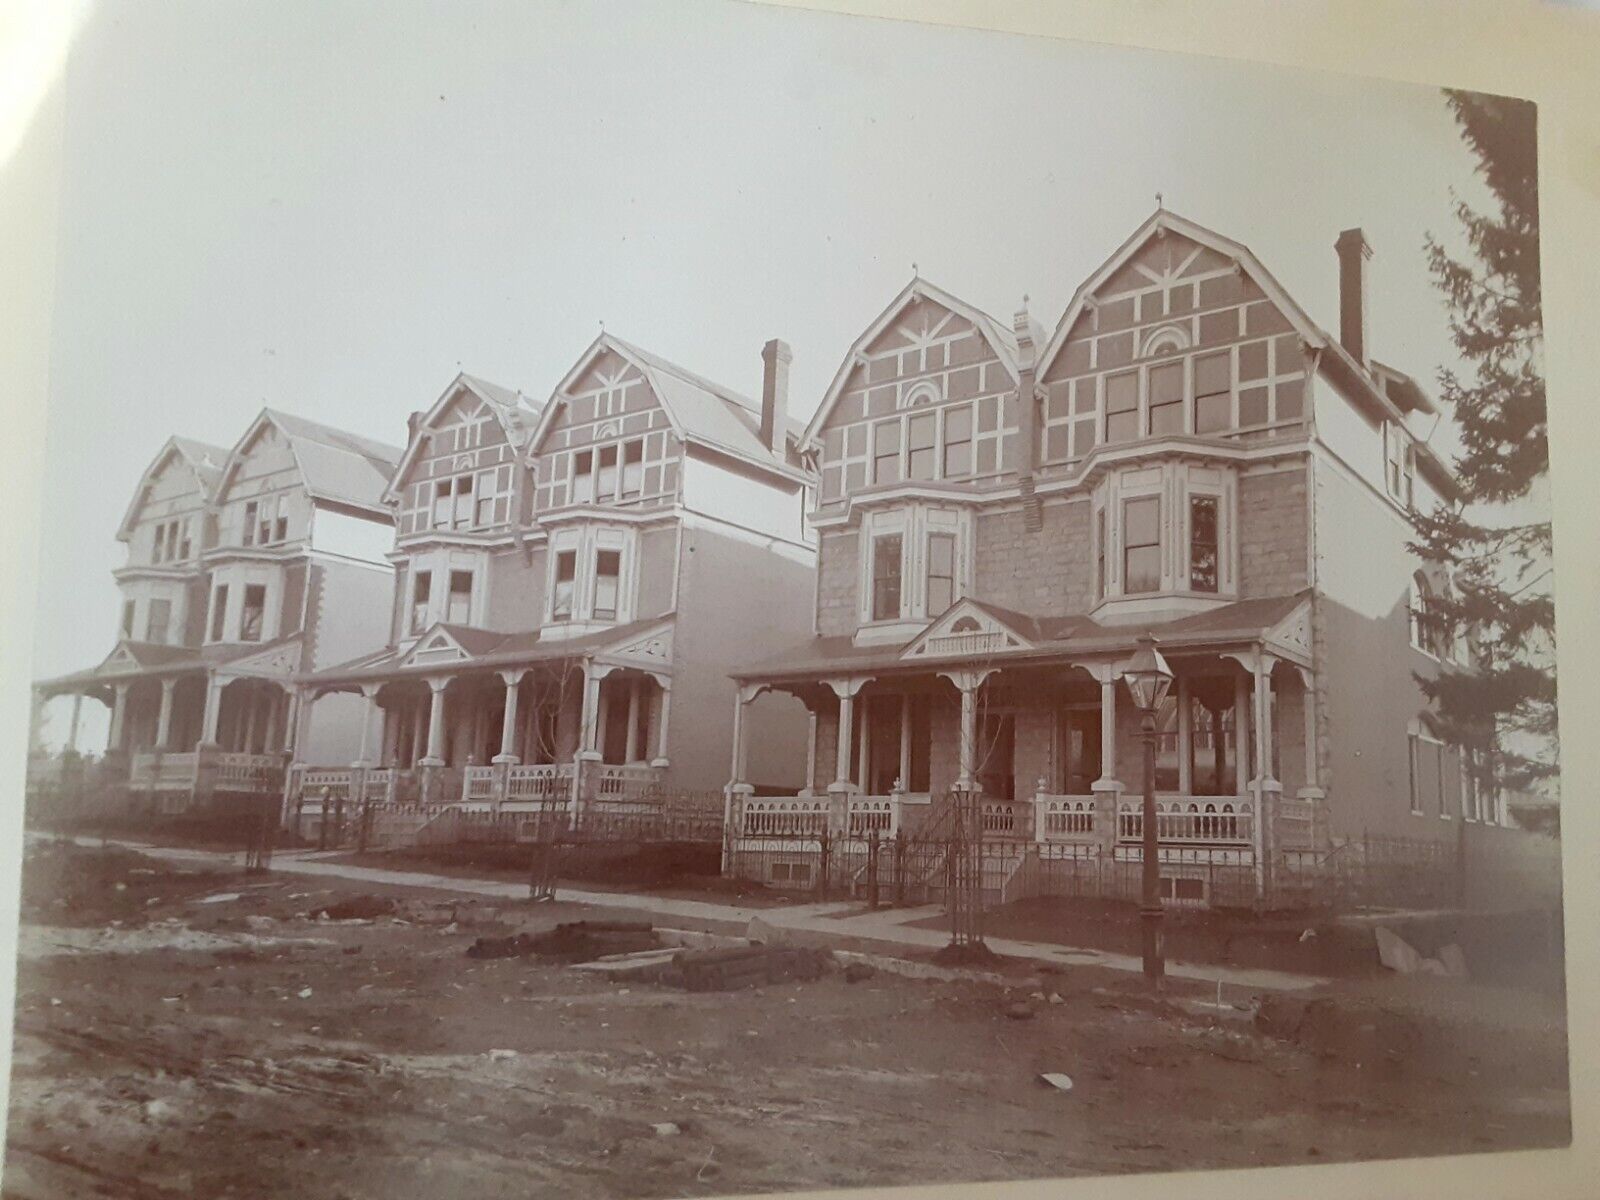  ORIGINAL c1897 8x10 mounted photograph West Philadelphia ? Pennsylvania houses